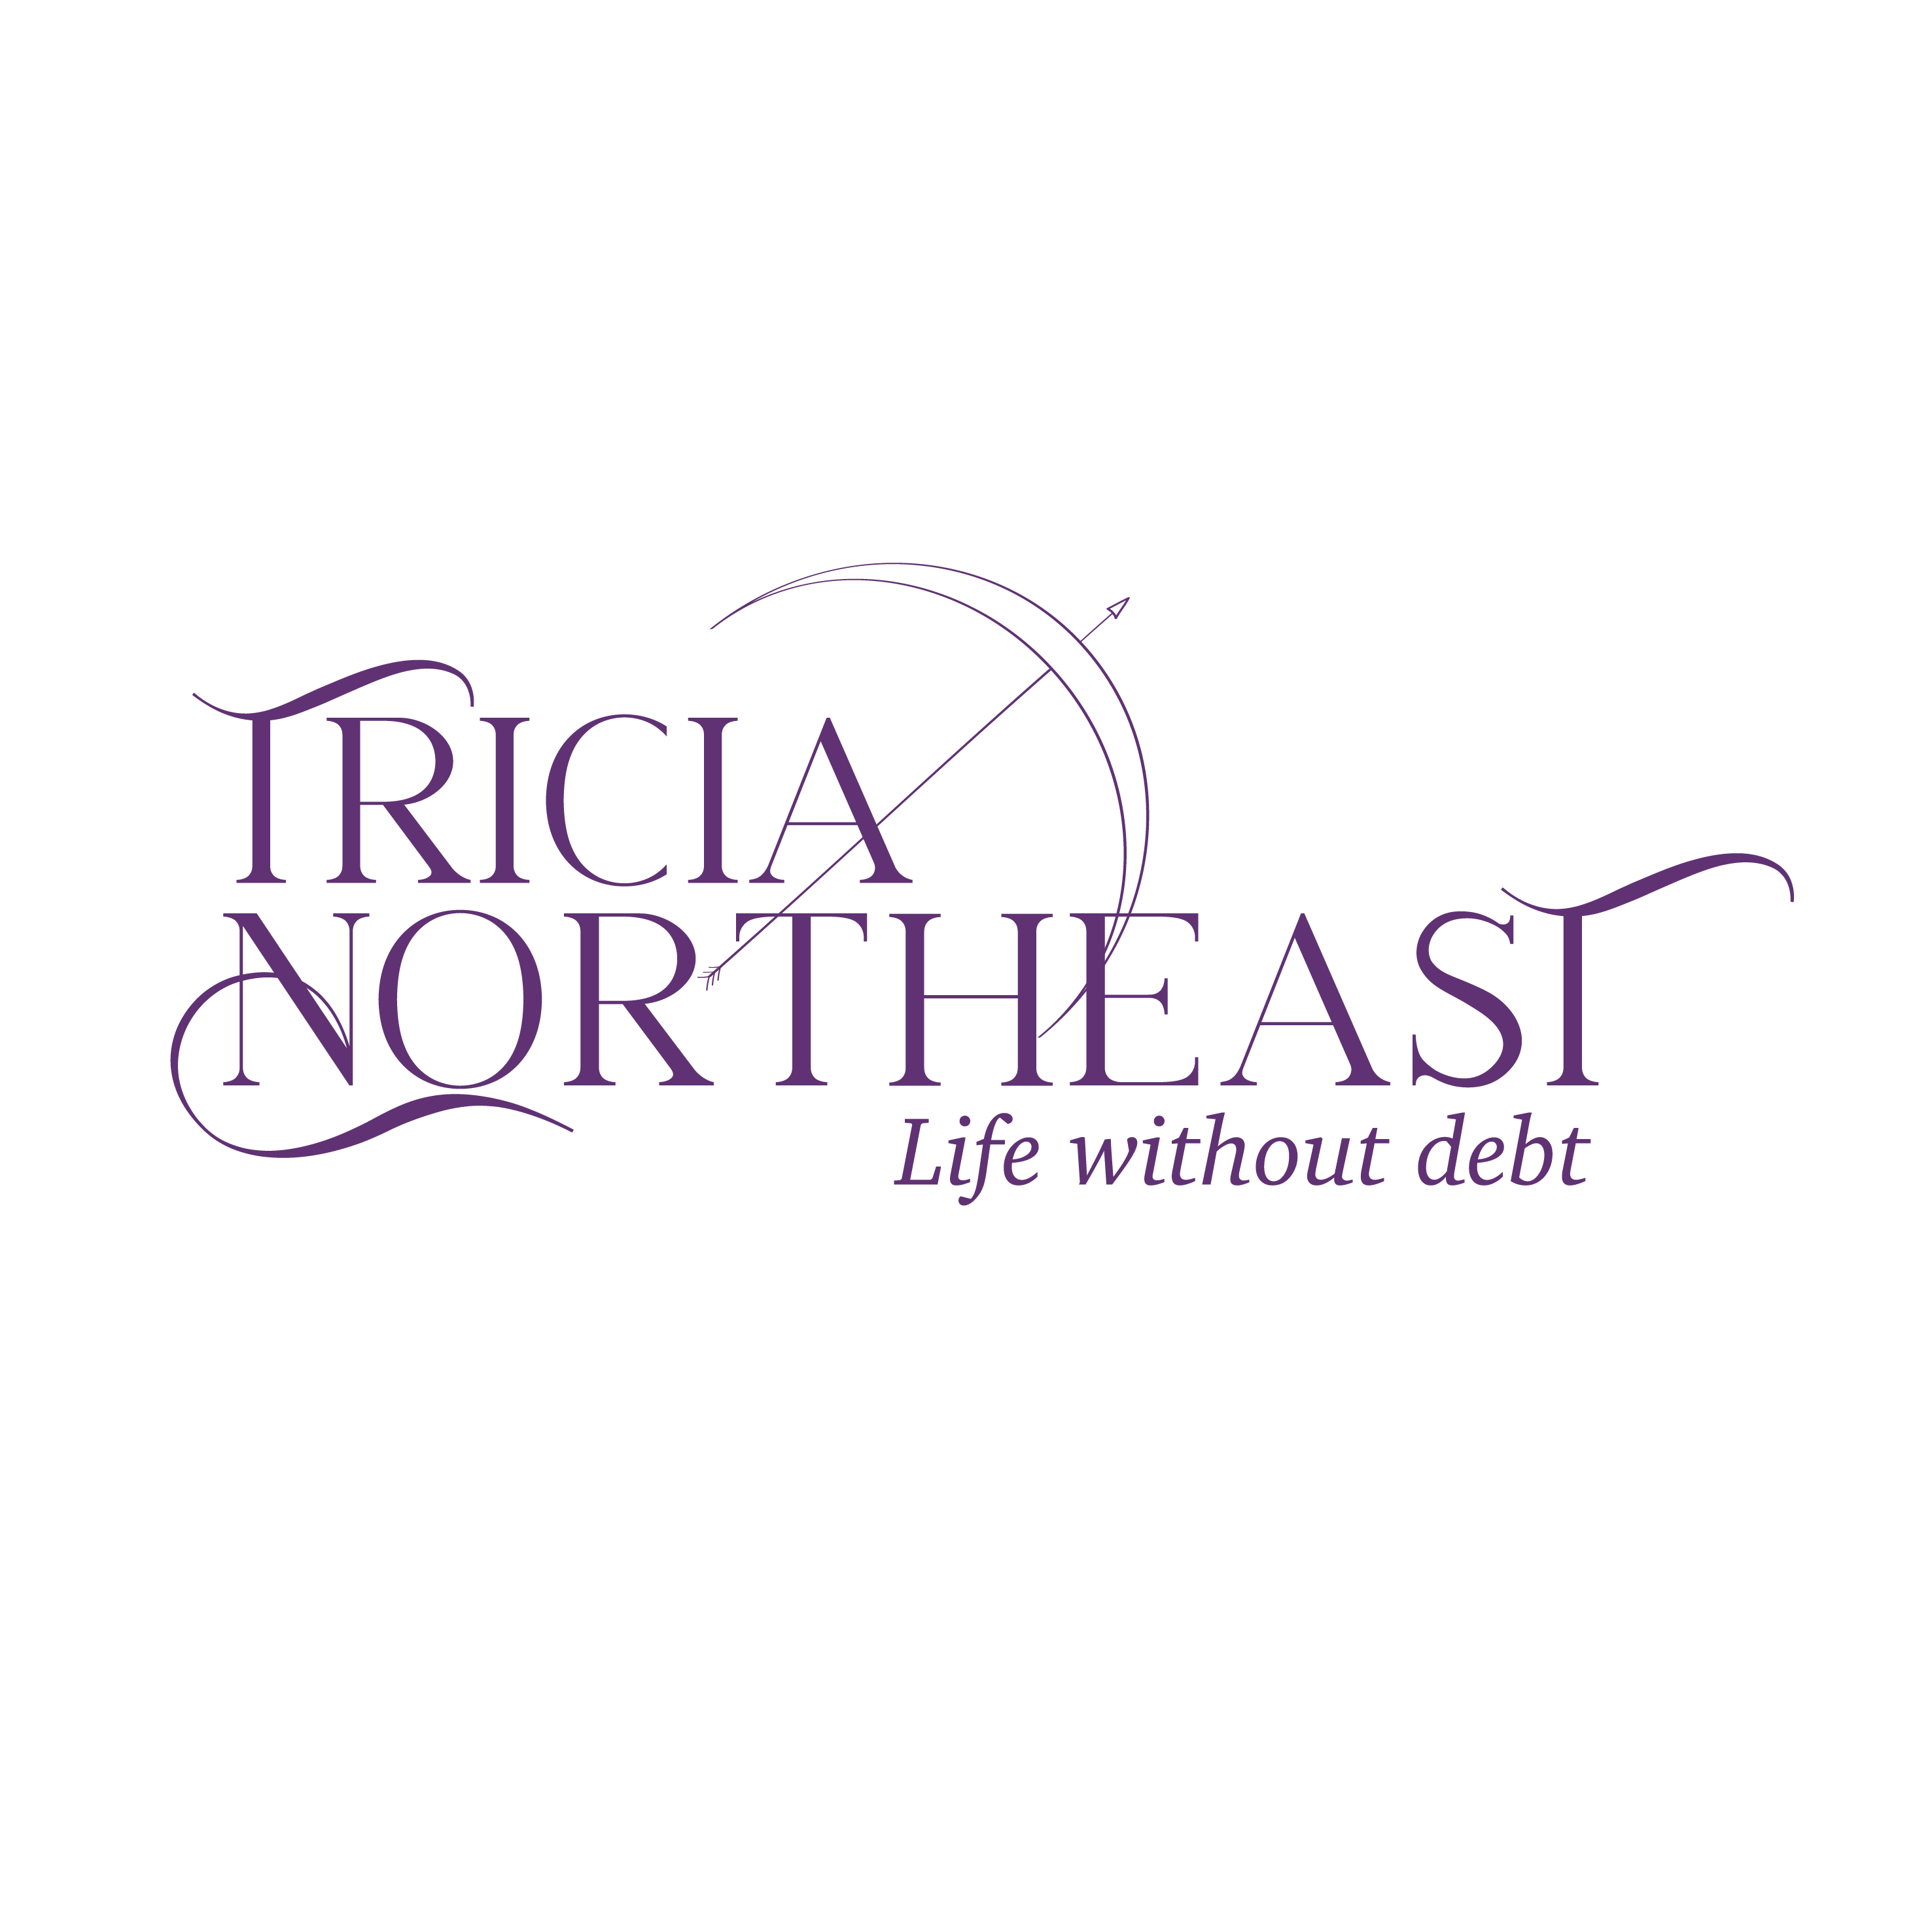 Tricia Northeast